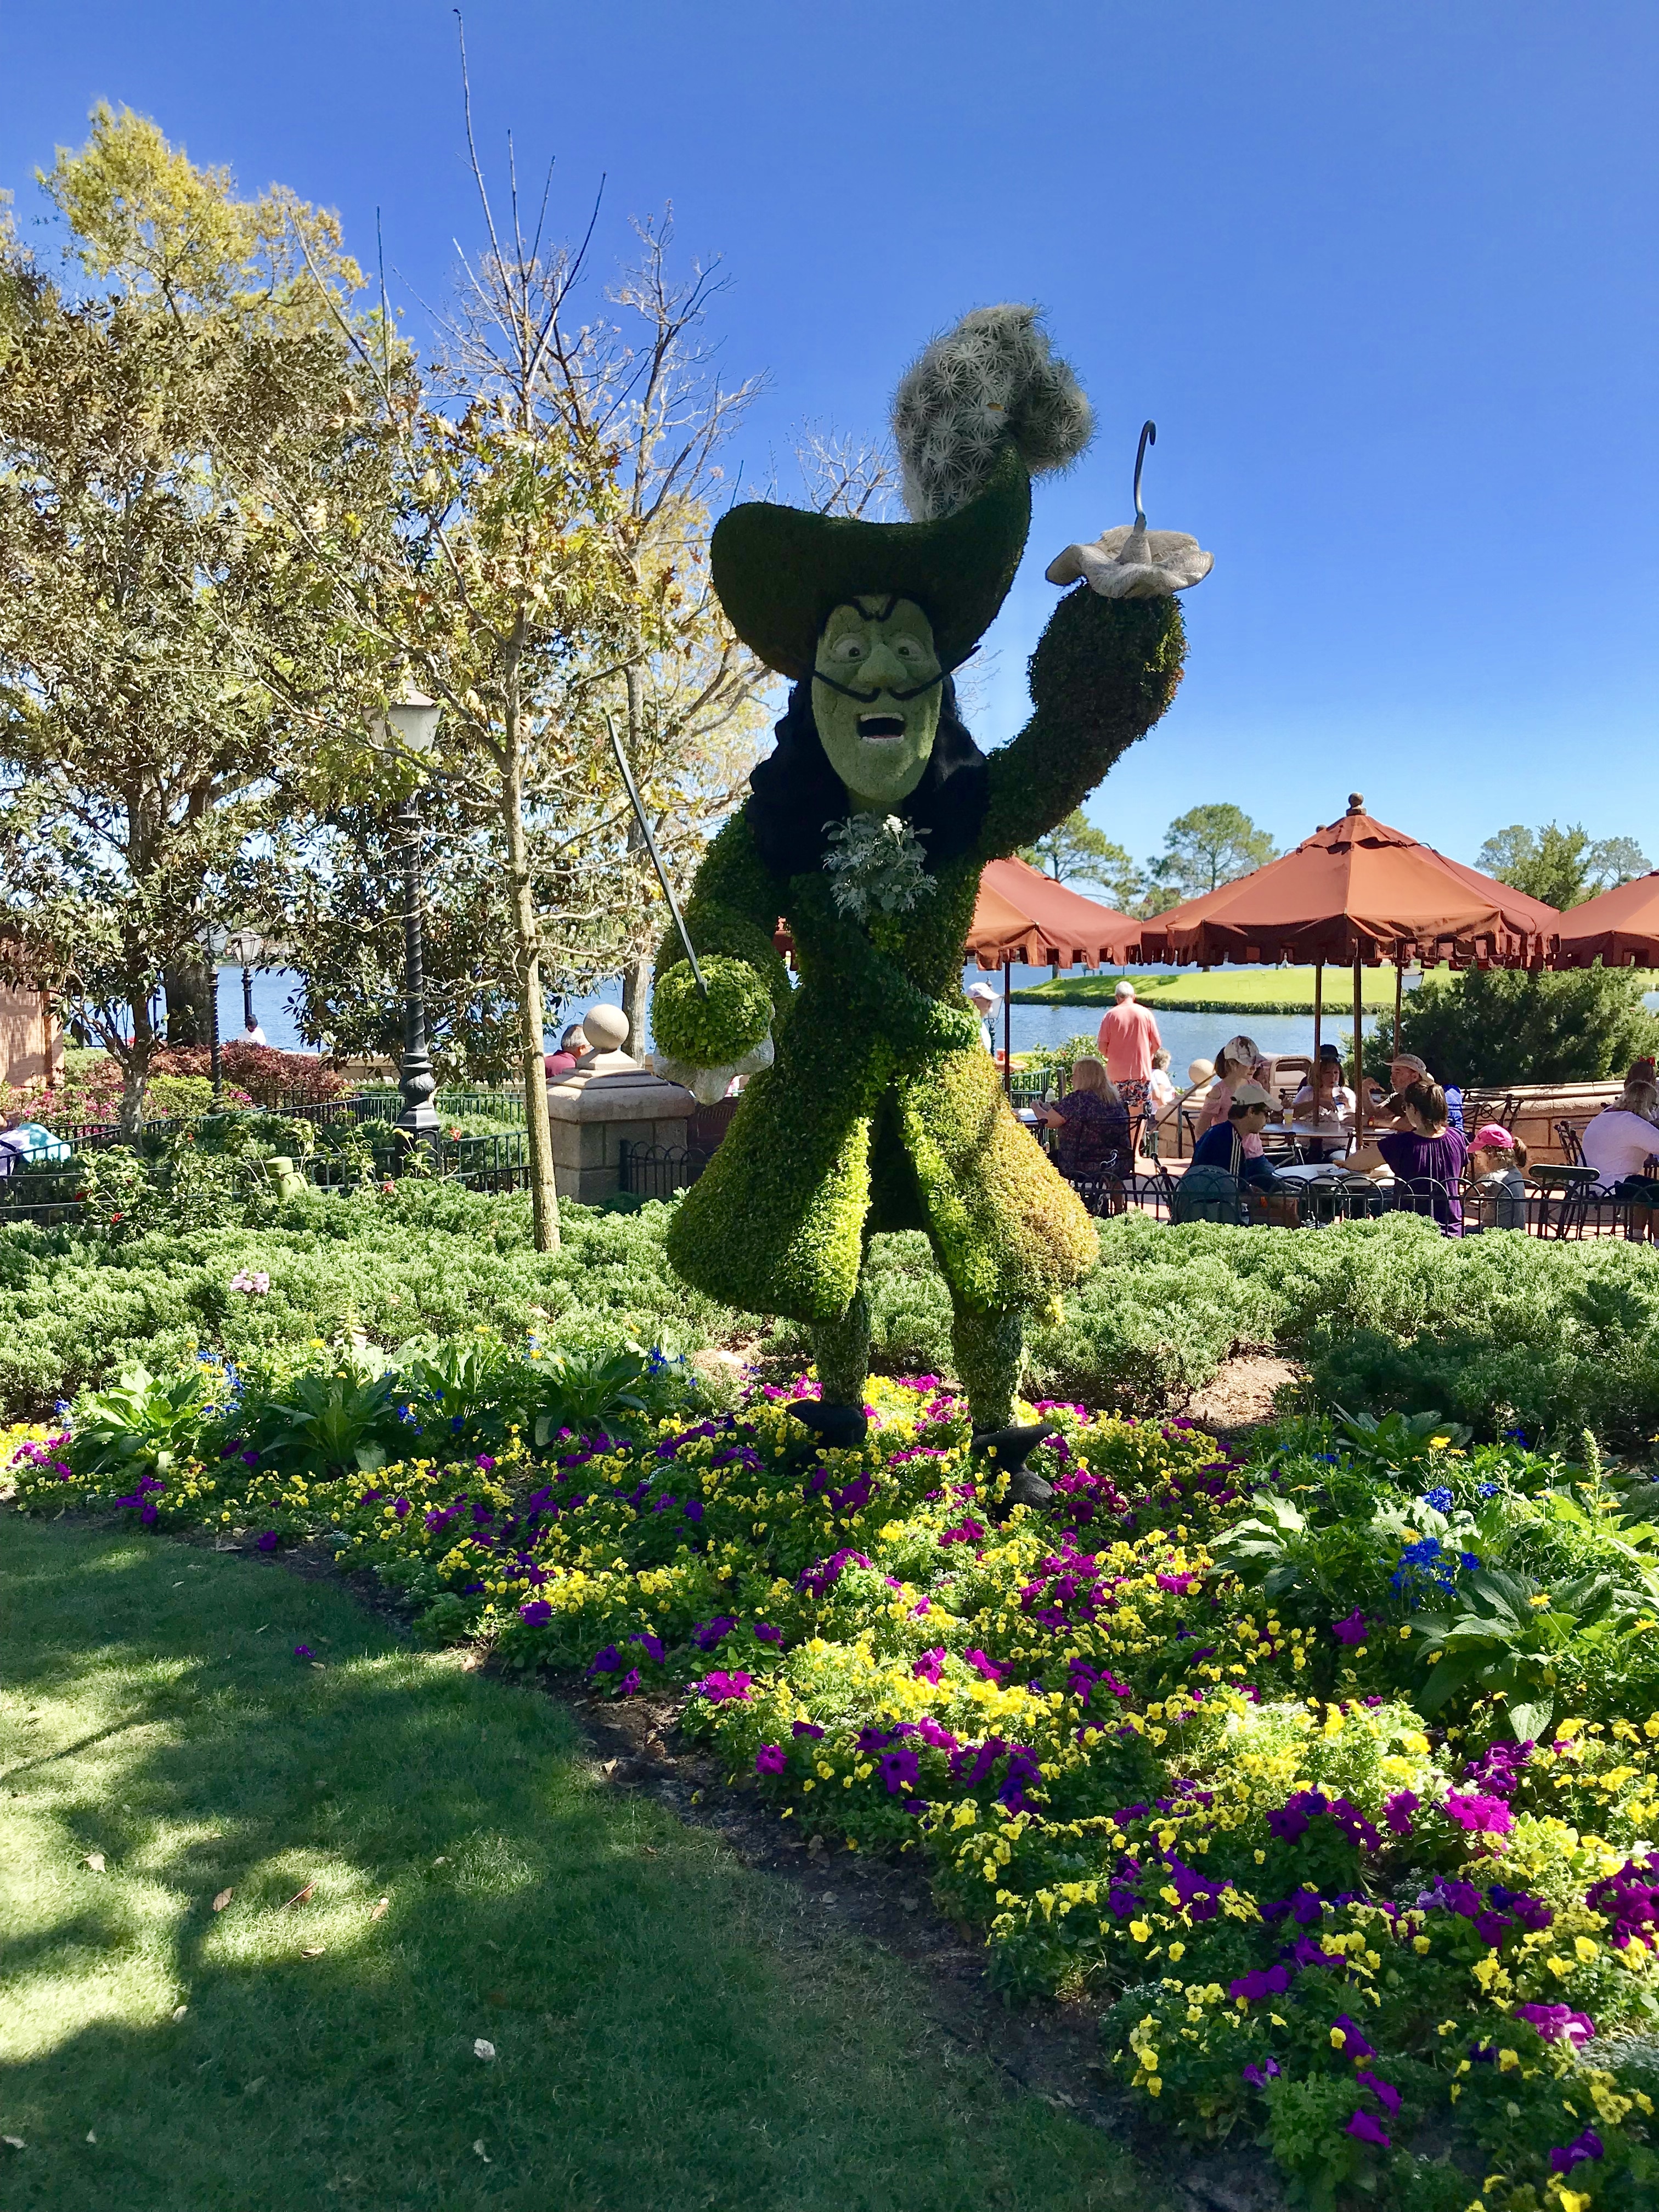 Captain Hook at Disney's Epcot Flower and Garden Festival 2018